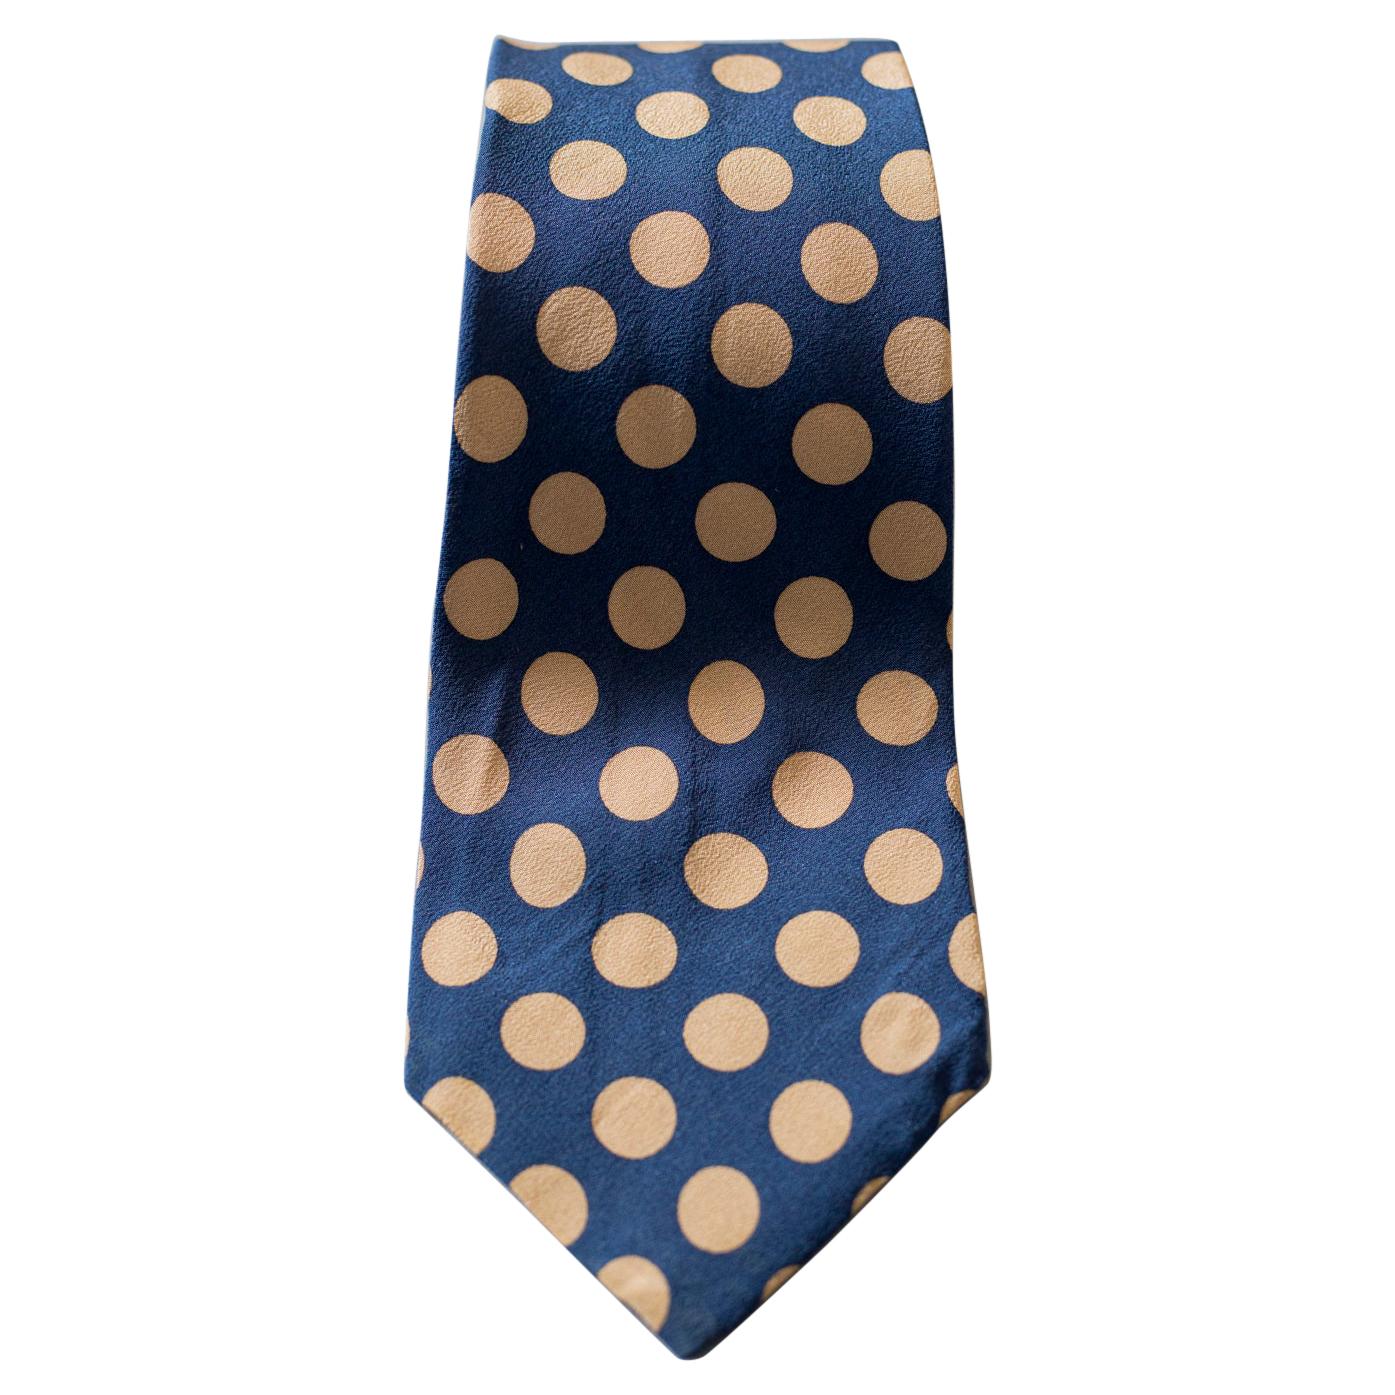 Vintage Philippe Larror 100% silk tie with polka dots